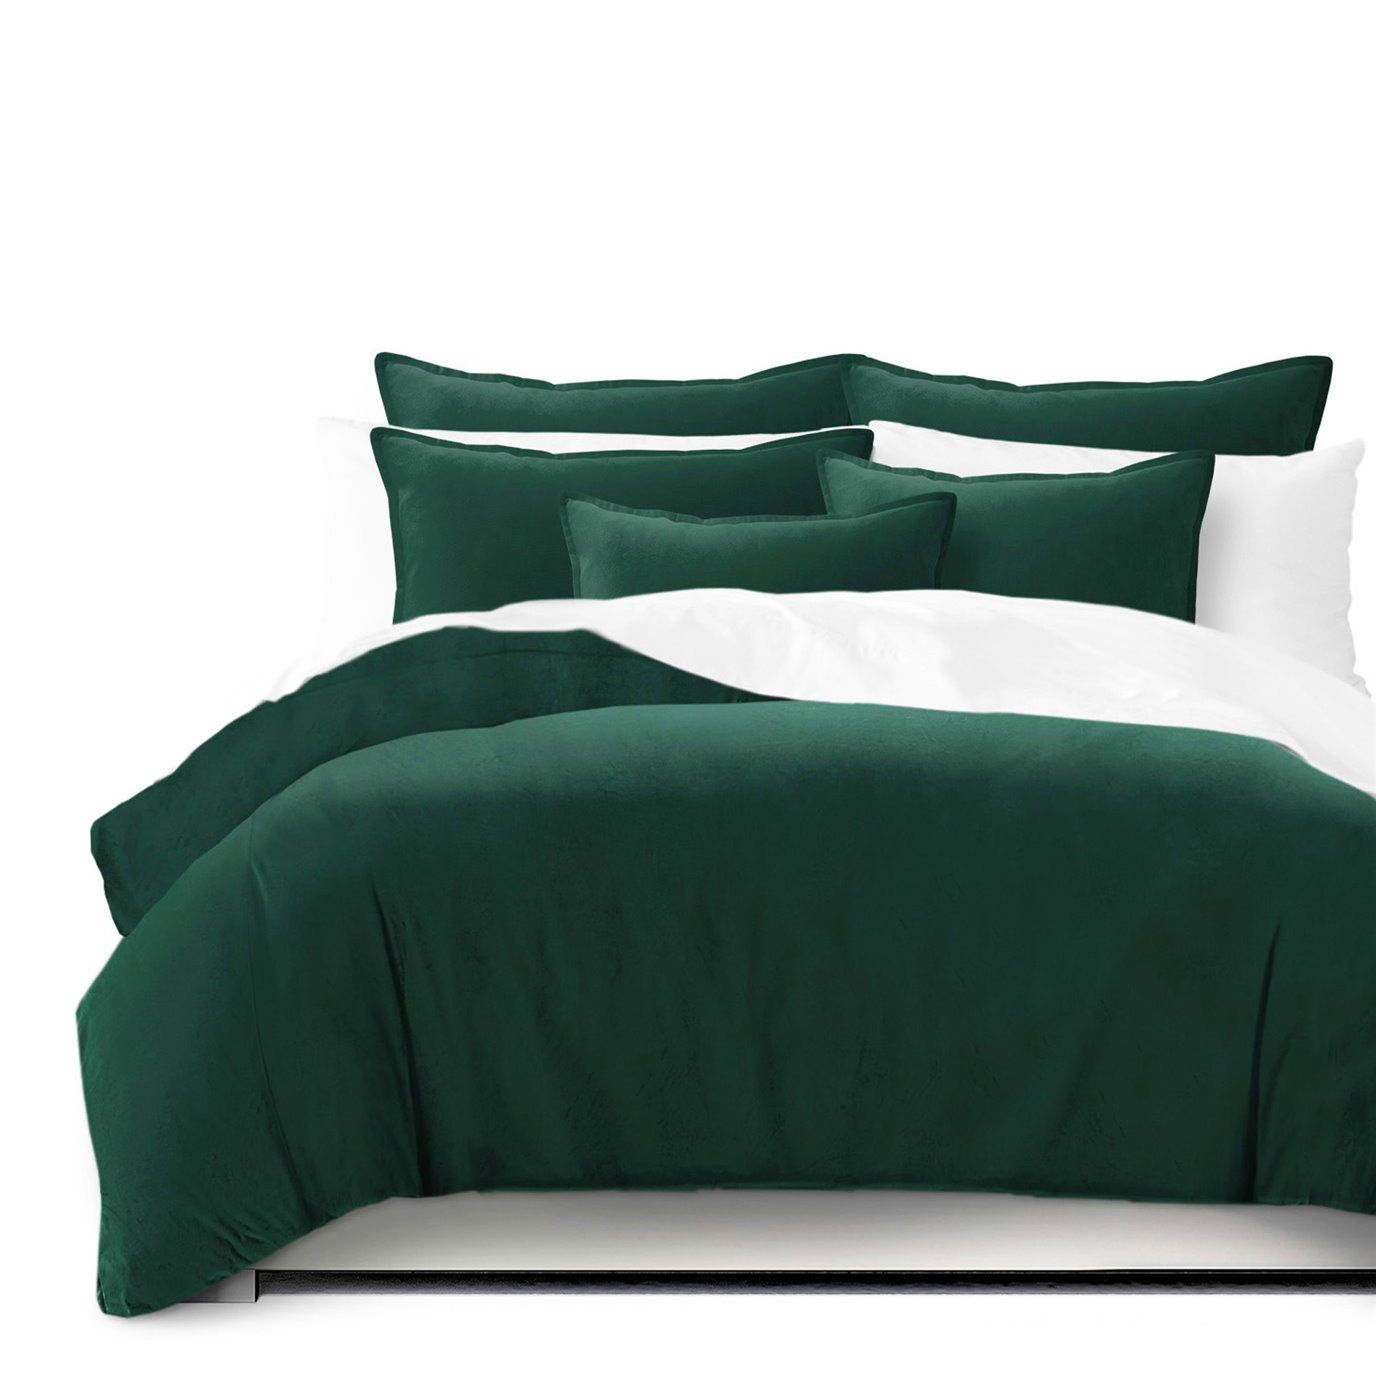 Vanessa Emerald Comforter and Pillow Sham(s) Set - Size Twin